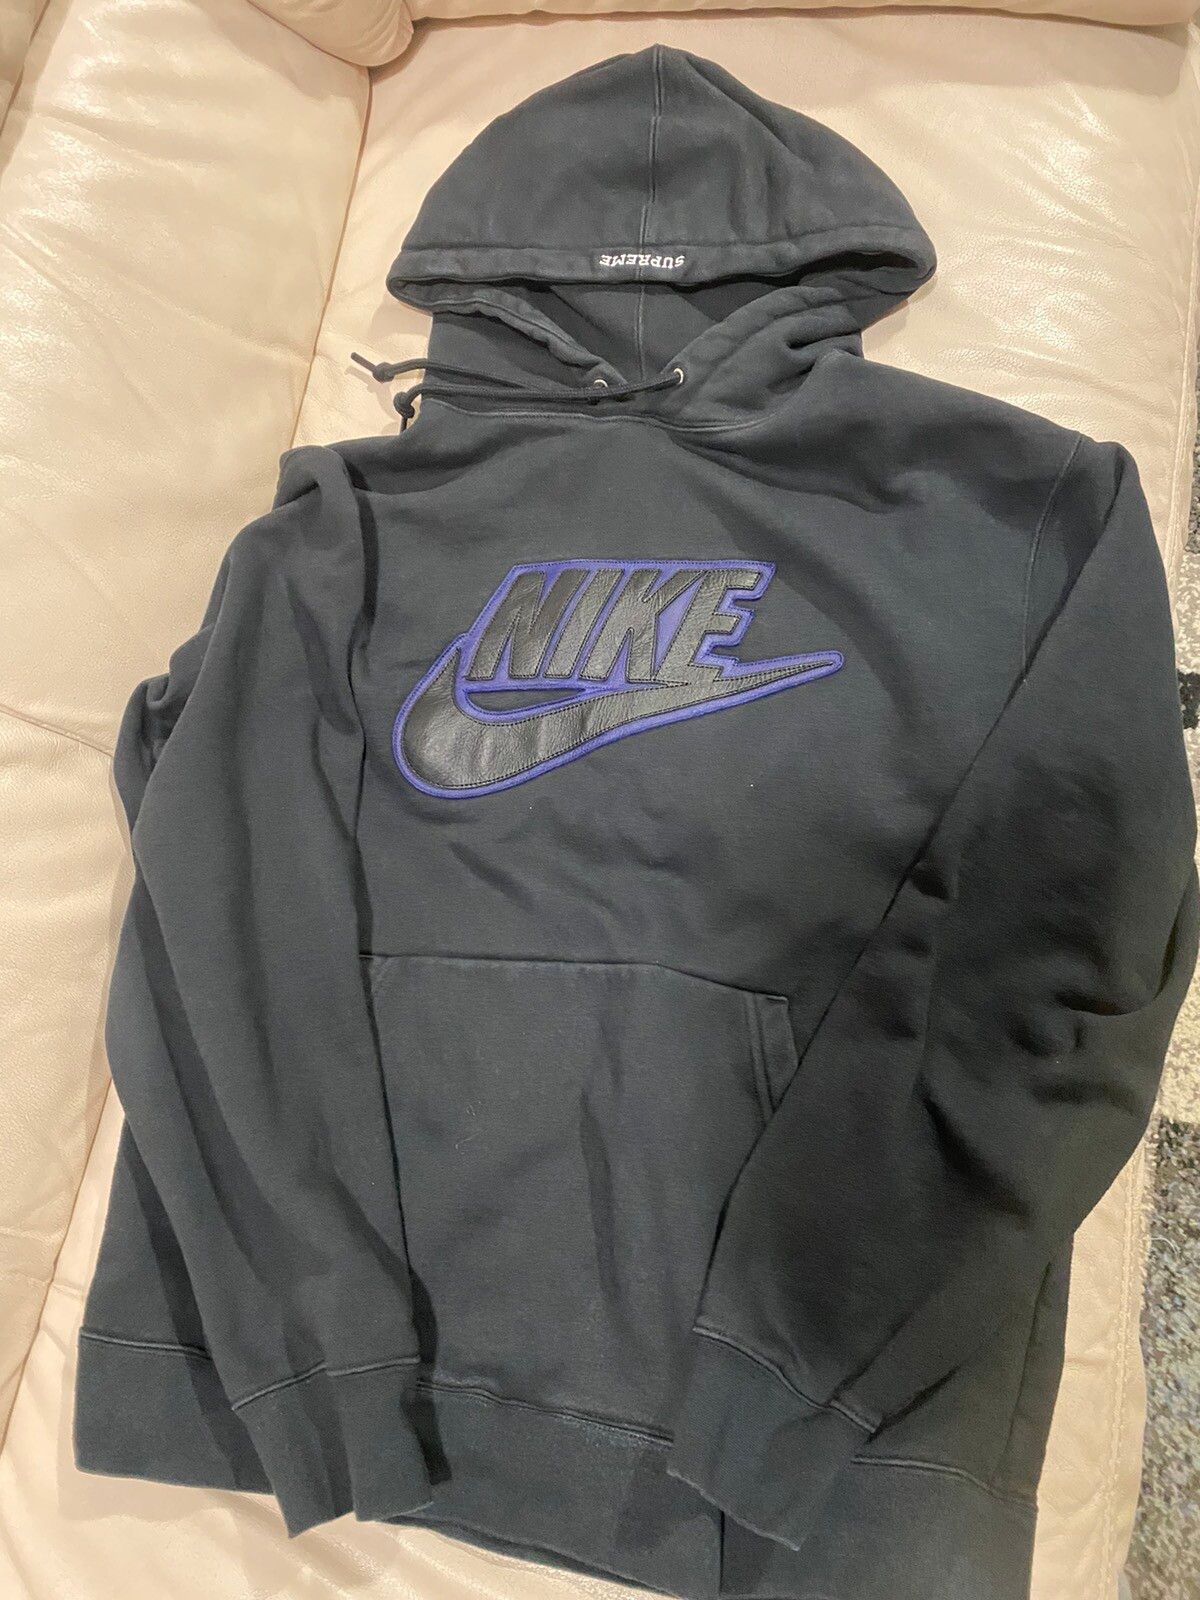 Supreme Nike Leather Applique Hooded Sweatshirt